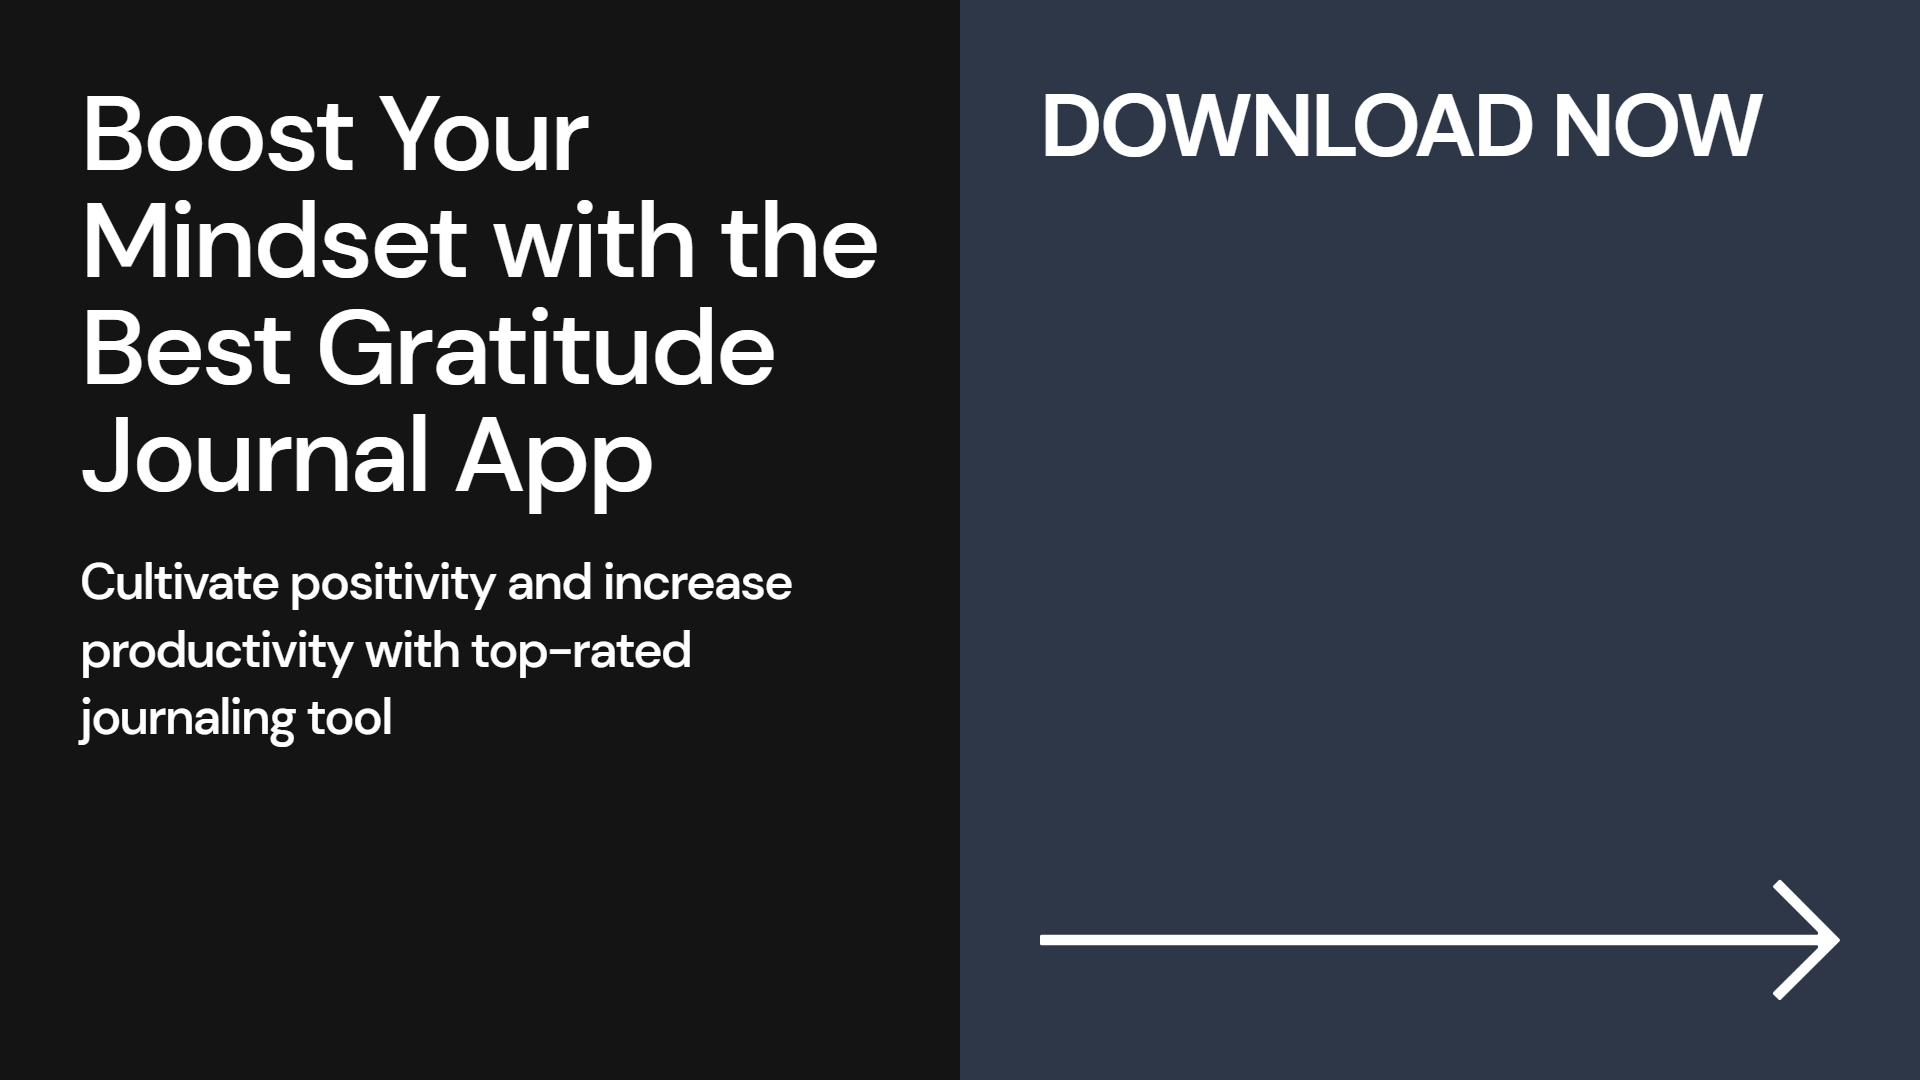 The Best Gratitude Journal App for Cultivating a Positive Mindset